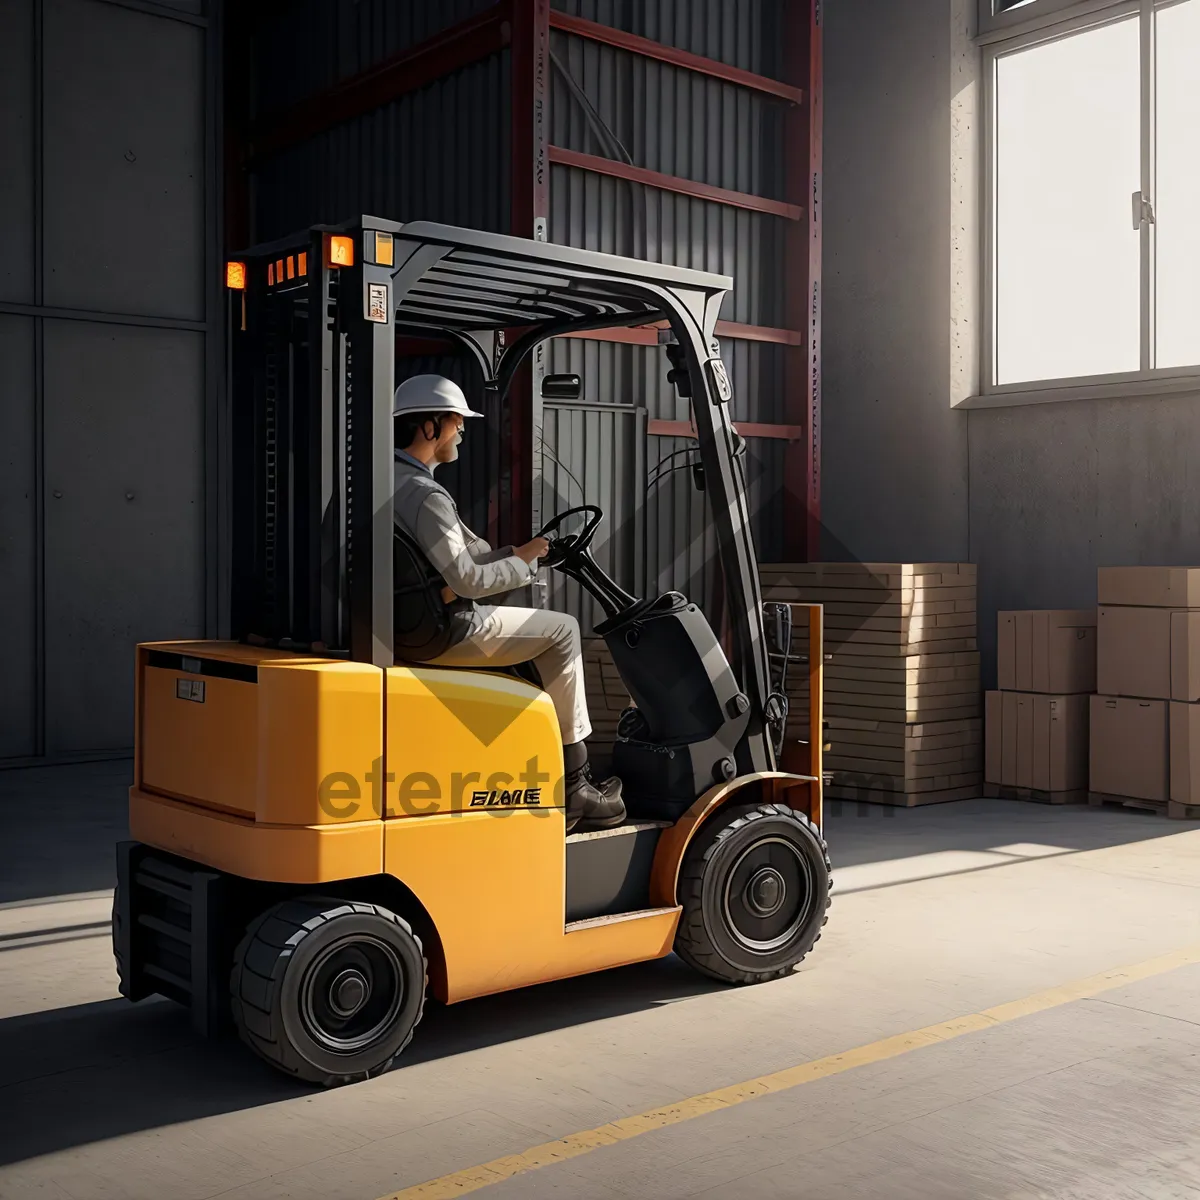 Picture of Industrial Forklift: Efficient Load Handling Equipment